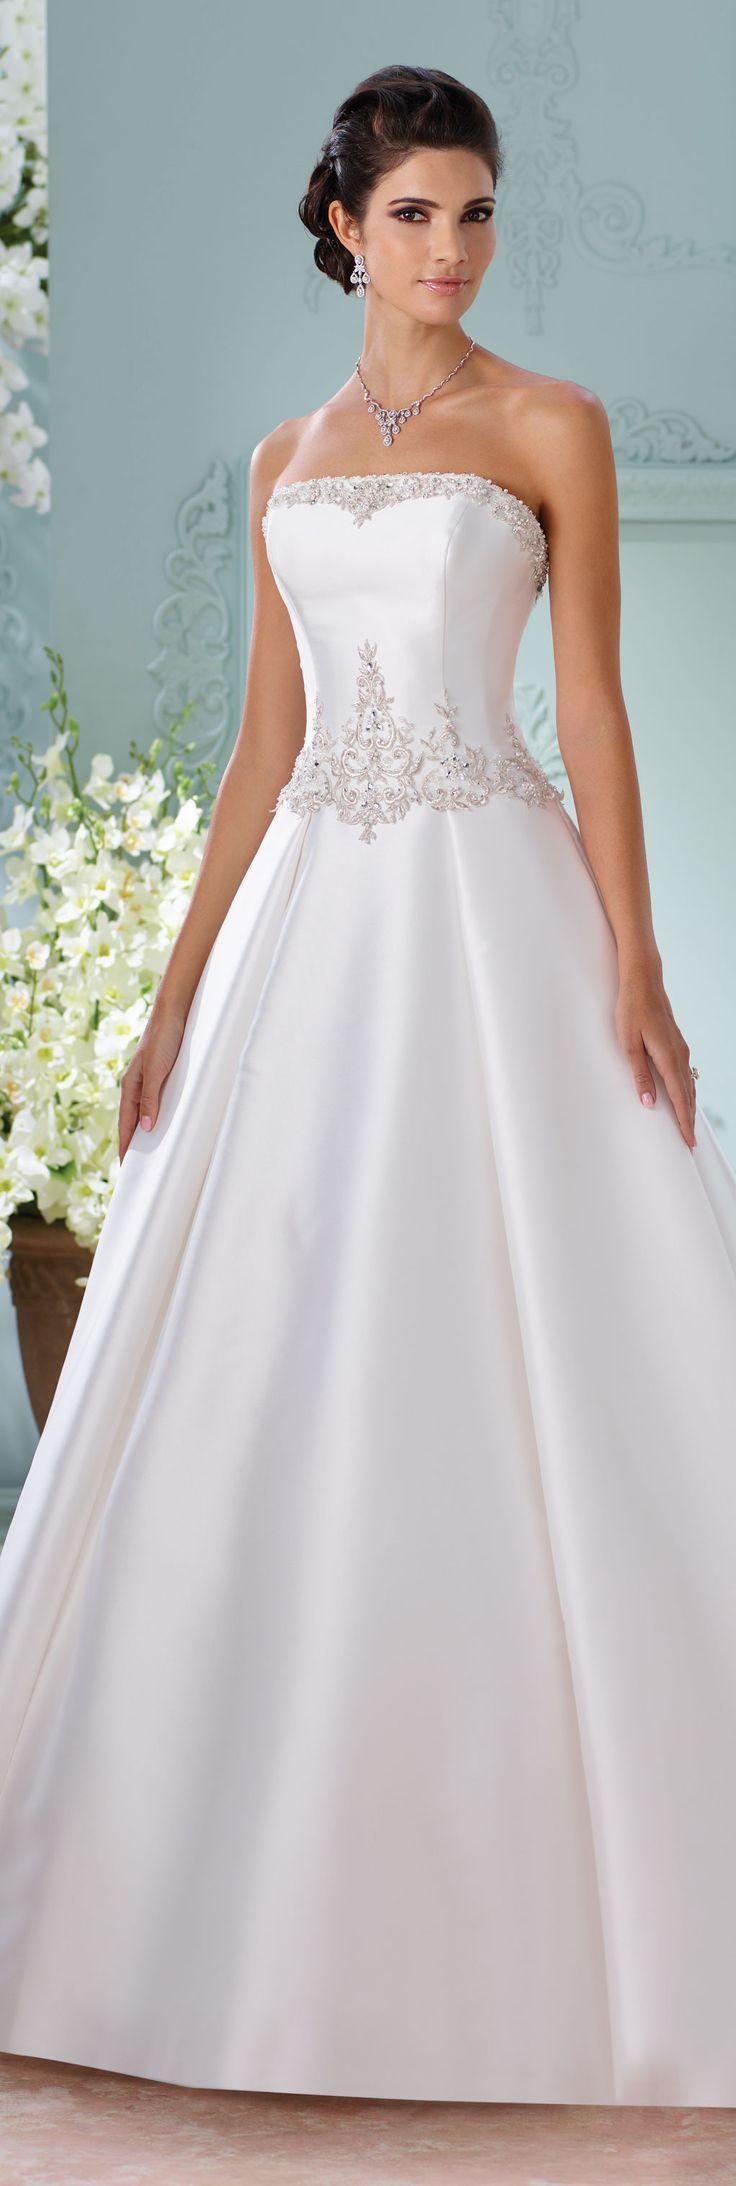 زفاف - Wedding Dress With Pockets